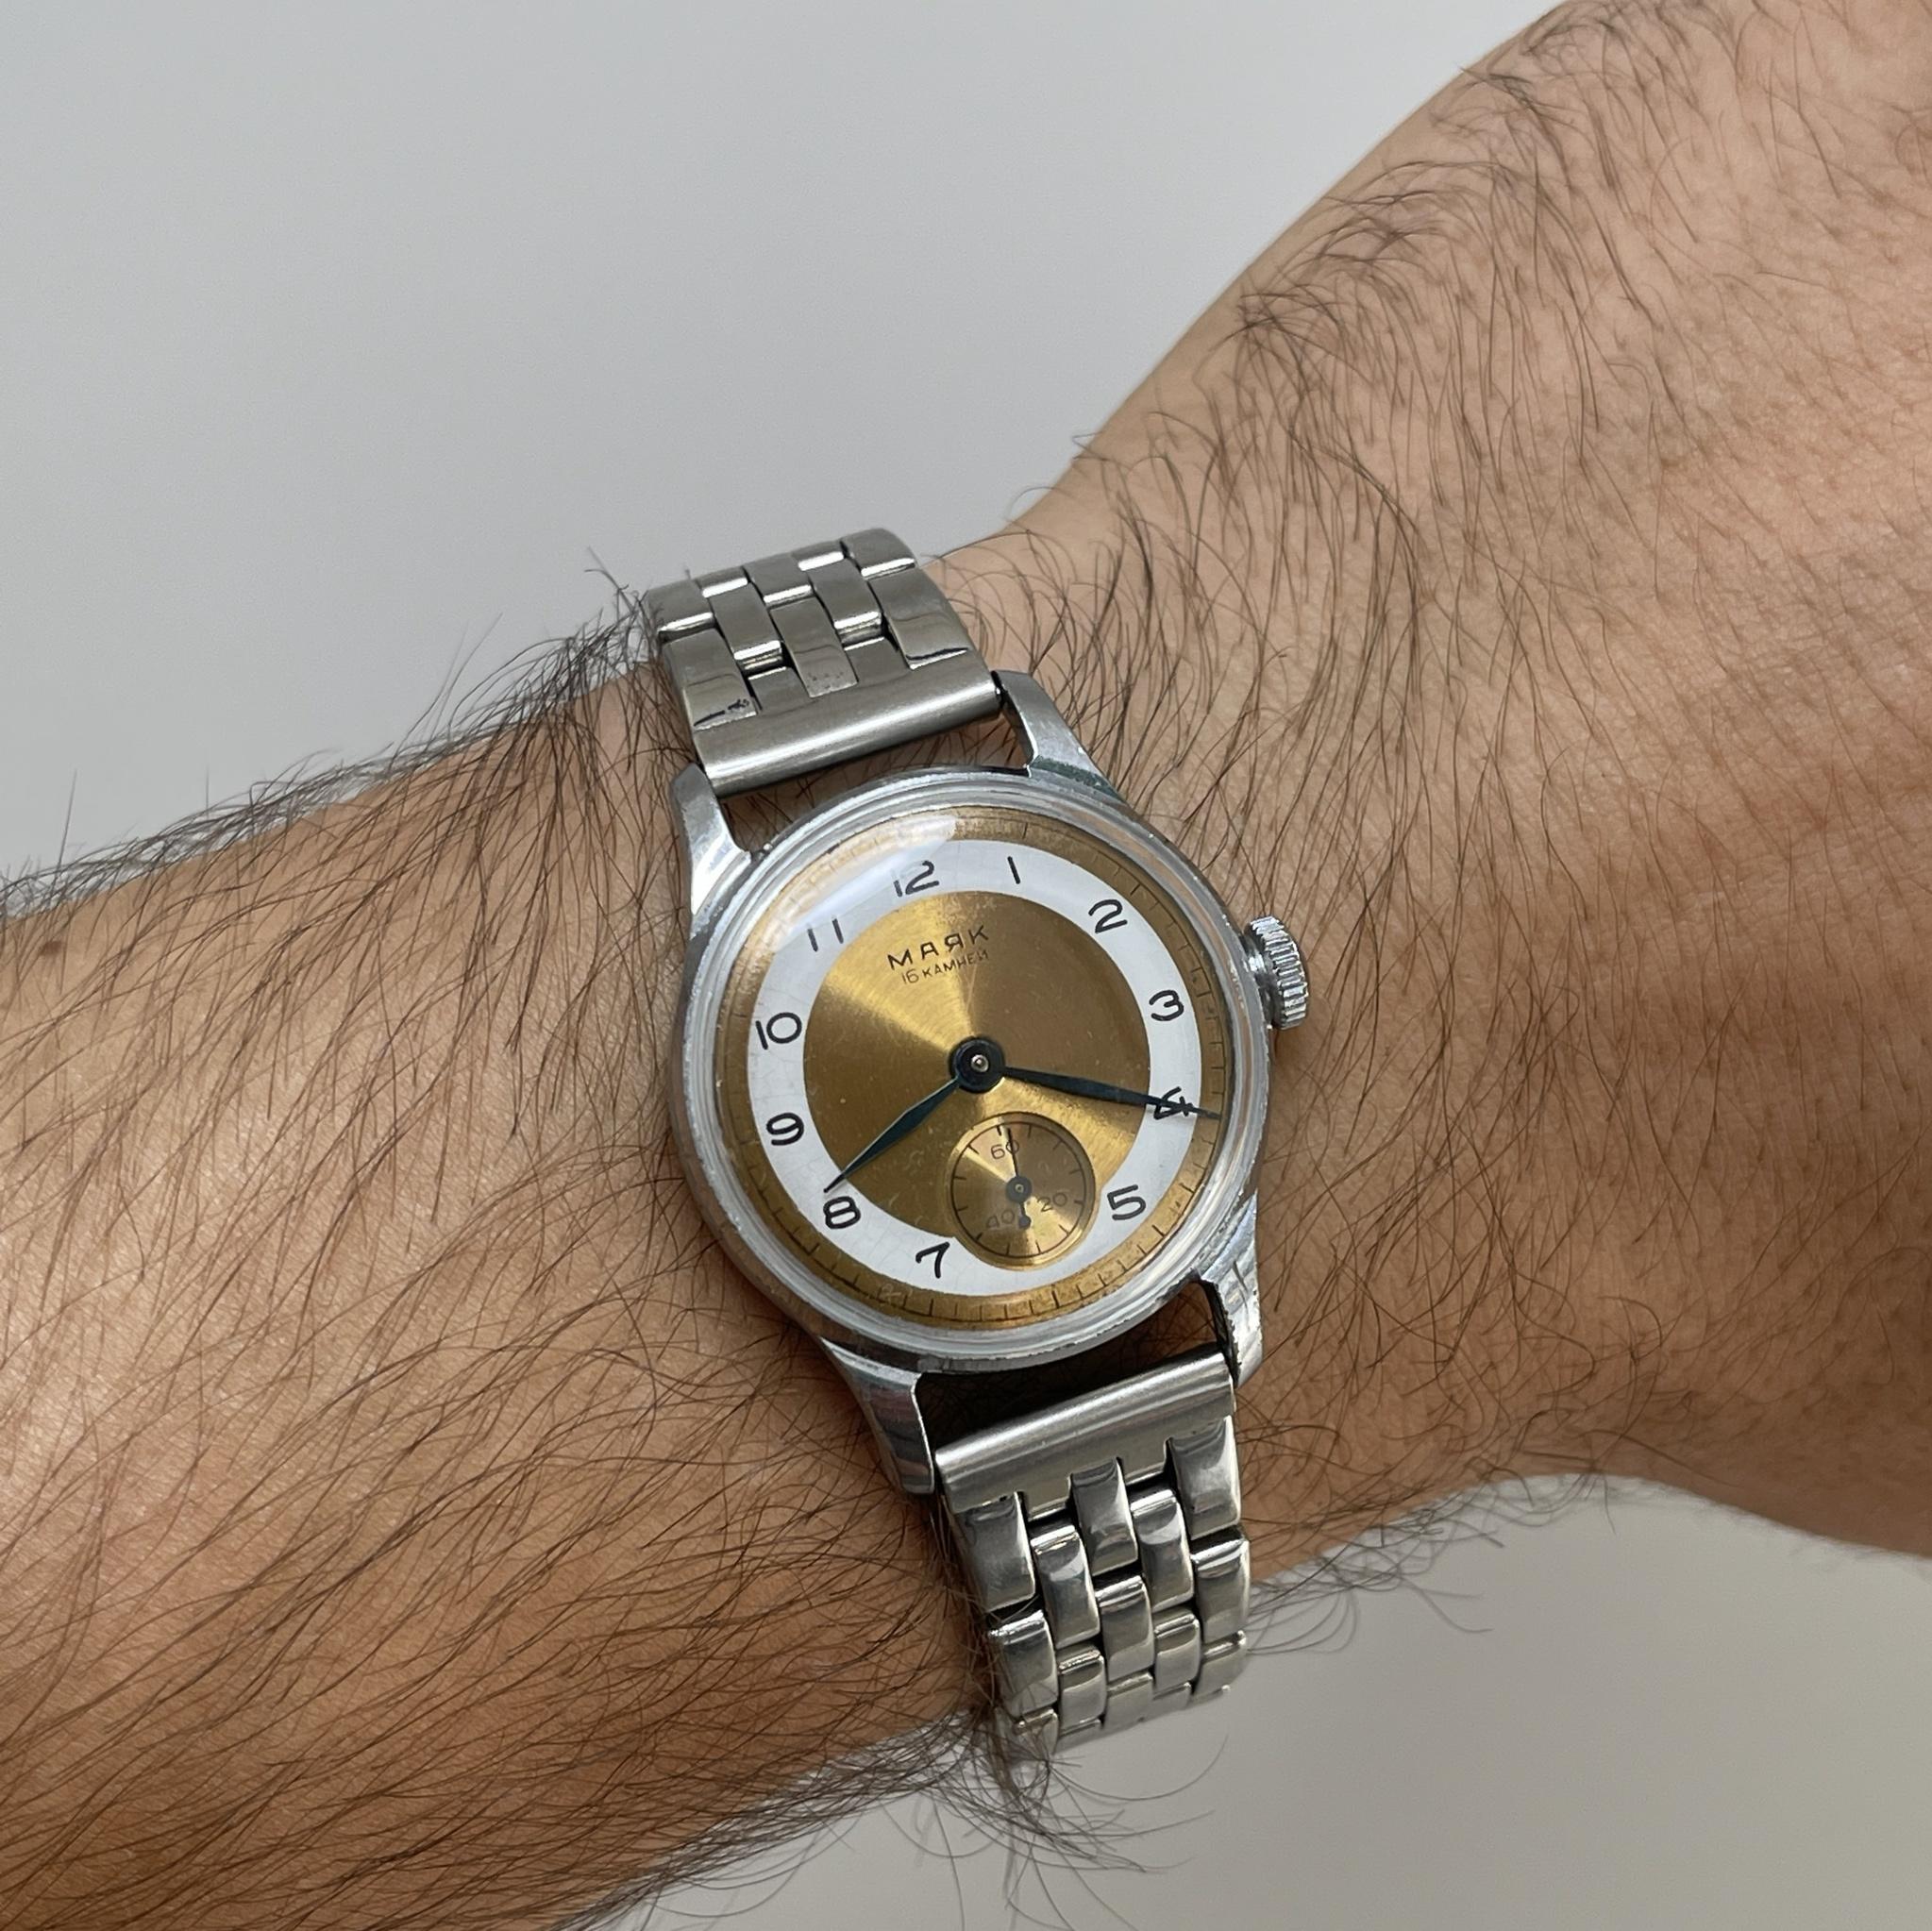 Mayak Majak Watch USSR 1MChZ Vintage Soviet wristwatch | eBay